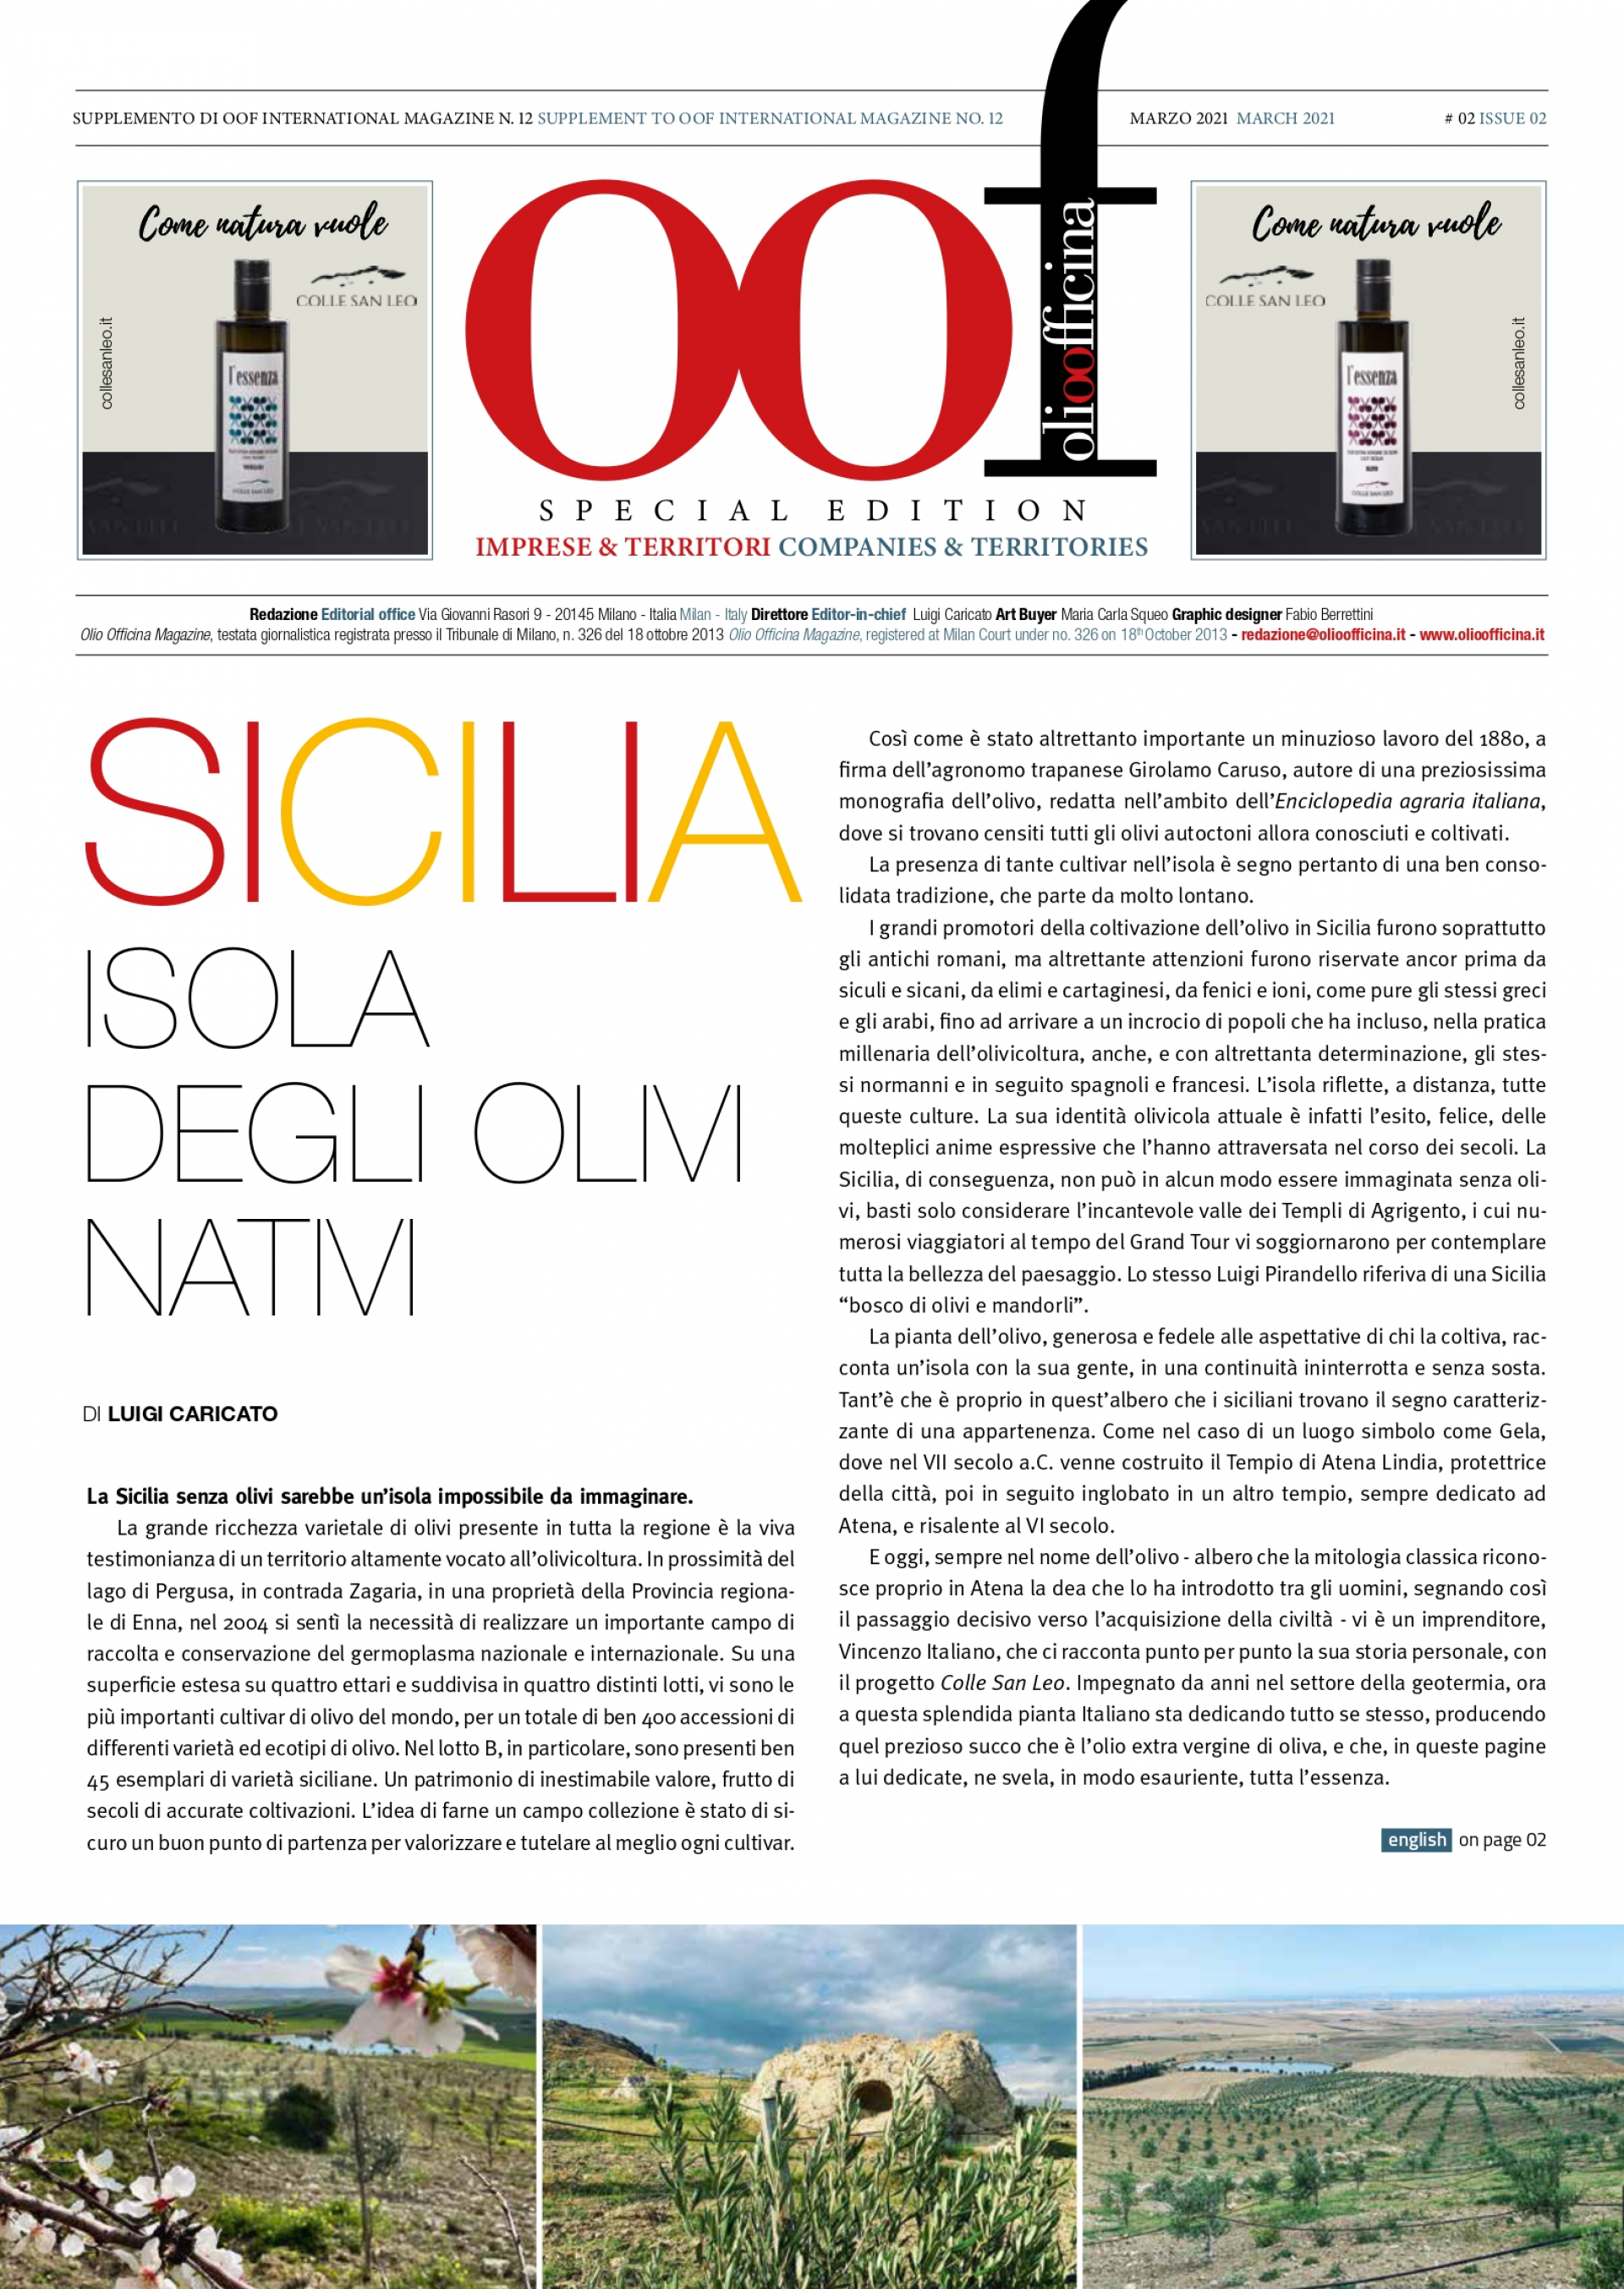 SICILIA - SICILY  Colle San Leo | Special Edition | Imprese & Territori - Companies & Territories